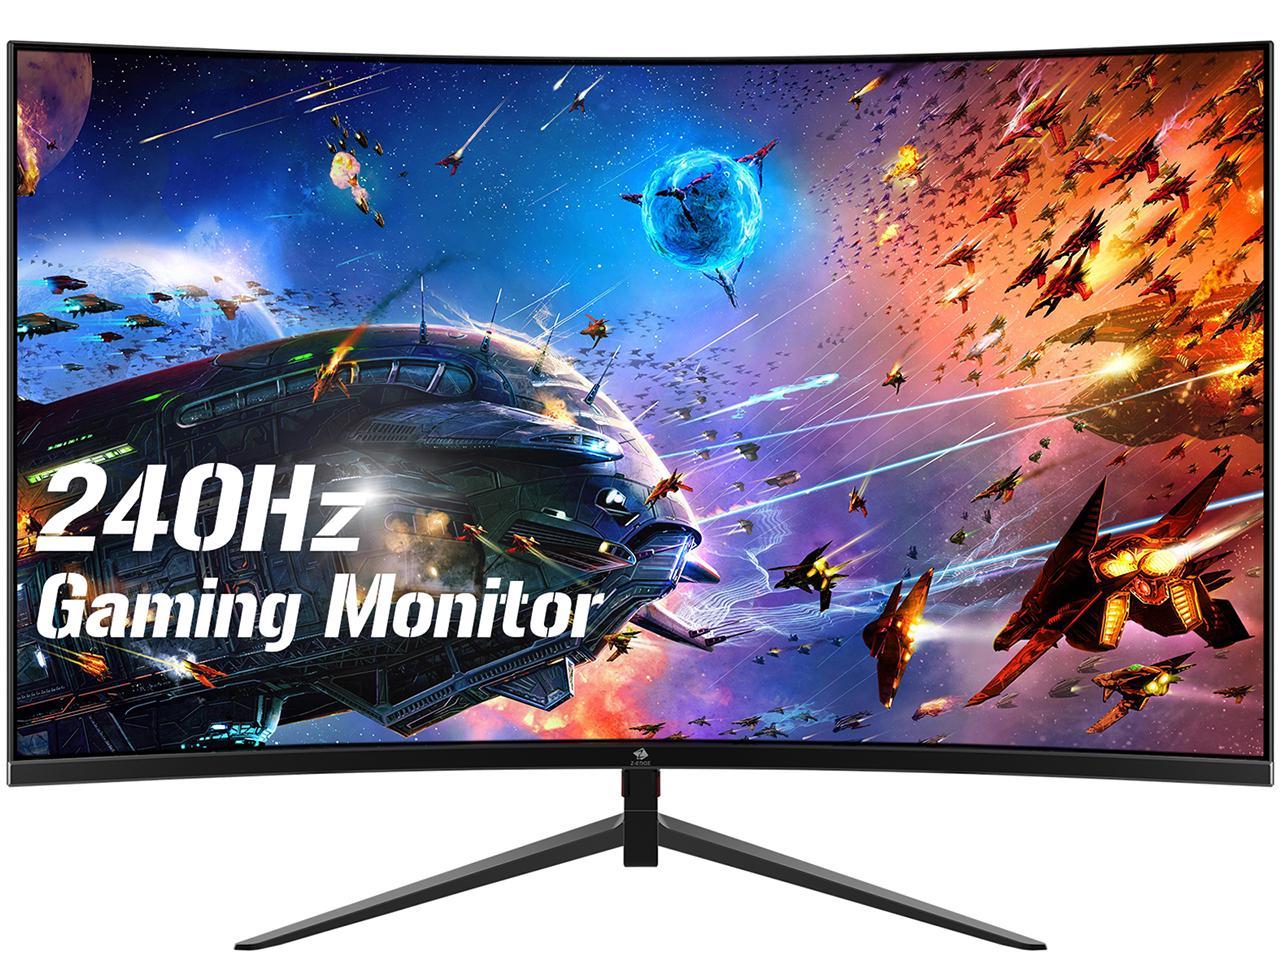 Z-EDGE UG27P 27" 1080P Gaming Monitor, 240Hz, 1ms, 350cd/m², HDR10, FreeSync, 2 2.0, x DisplayPort 1.2, Built-in Speakers, with RGB Breathing Light - Newegg.com